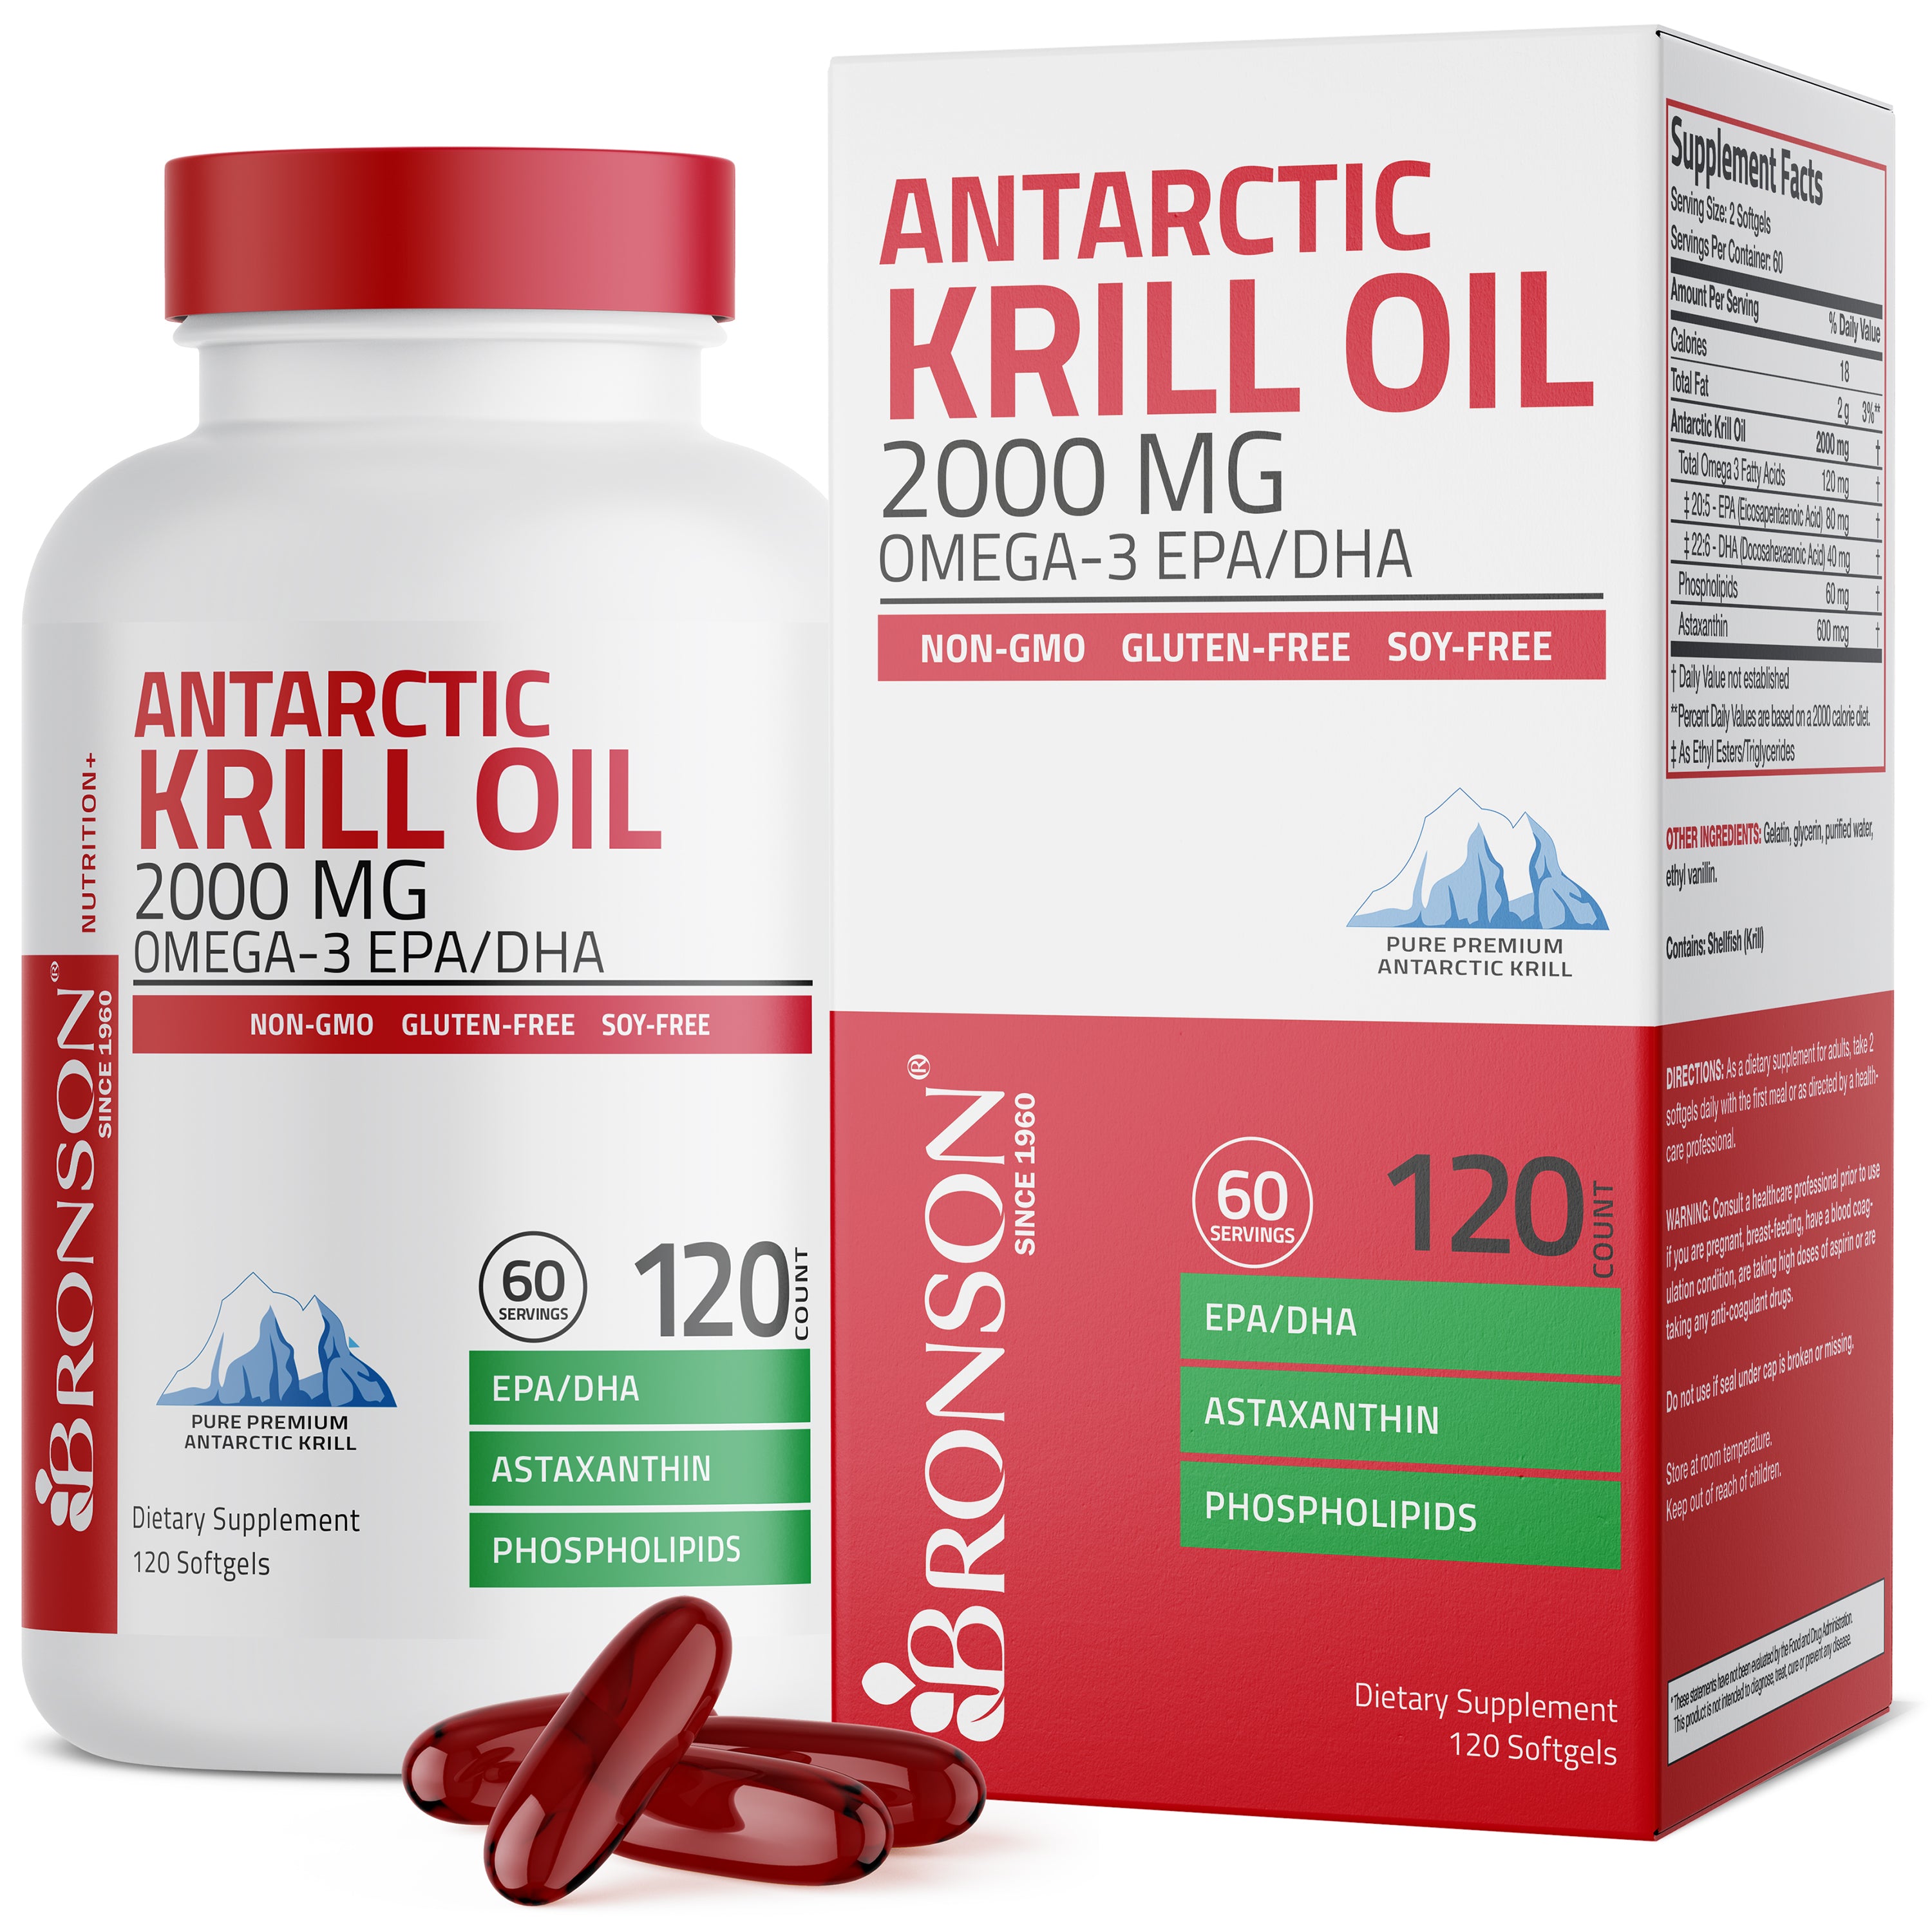 Antarctic Krill Oil Omega-3 EPA DHA Non-GMO - 2,000 mg view 1 of 6